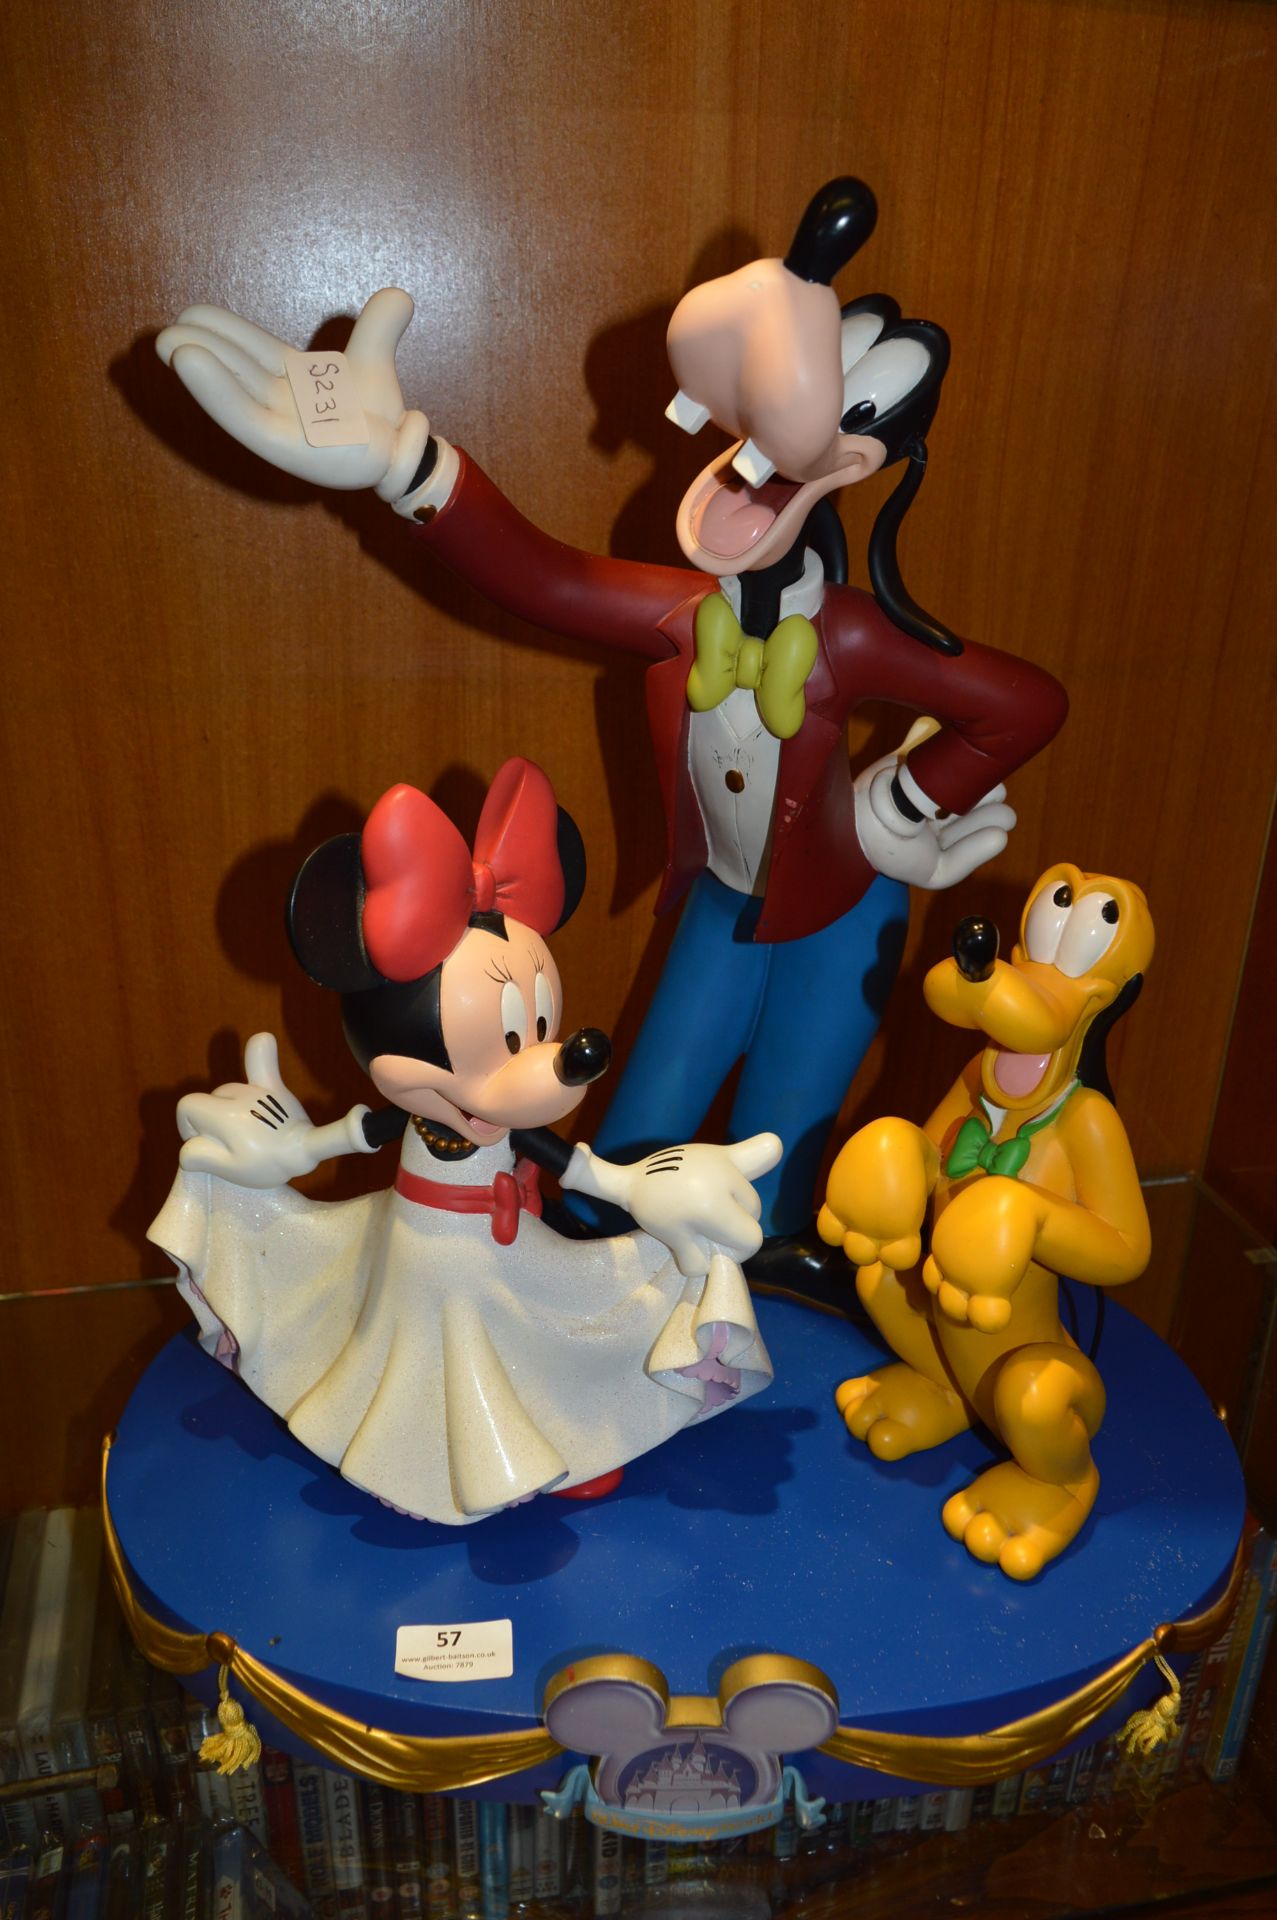 Walt Disney Figurines on Stand - Goofy, Minnie and